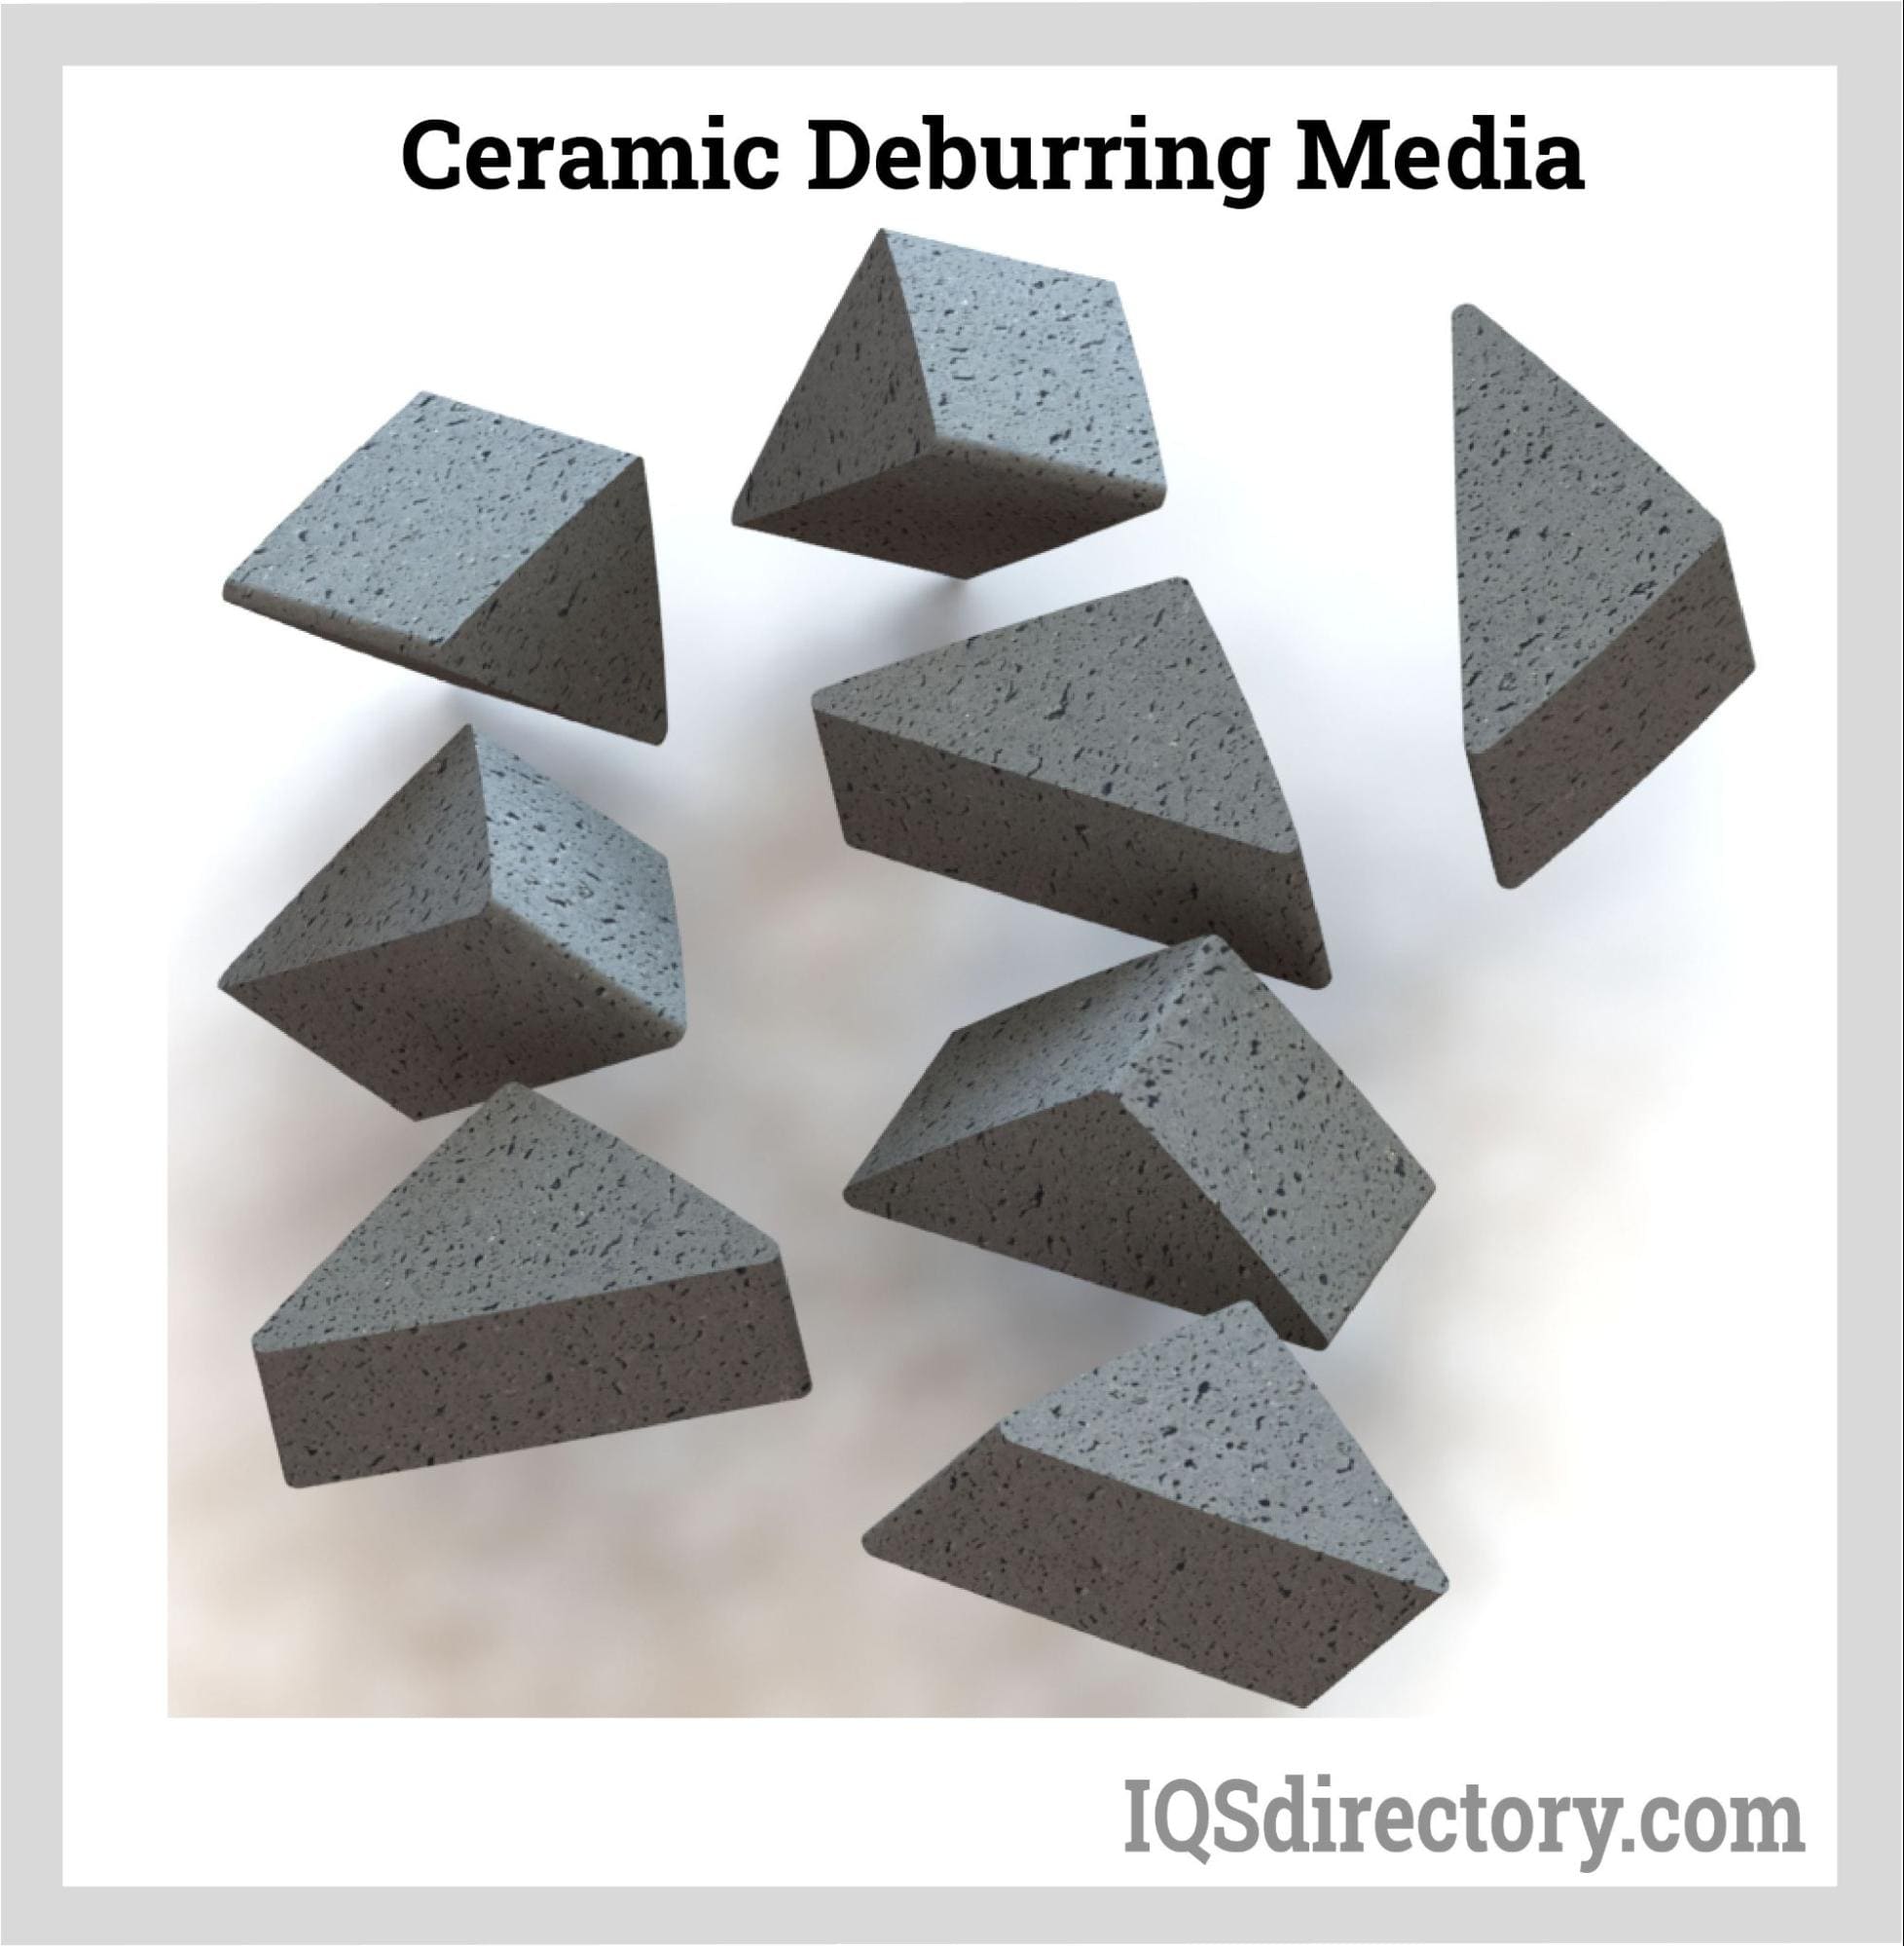 Ceramic Deburring Media